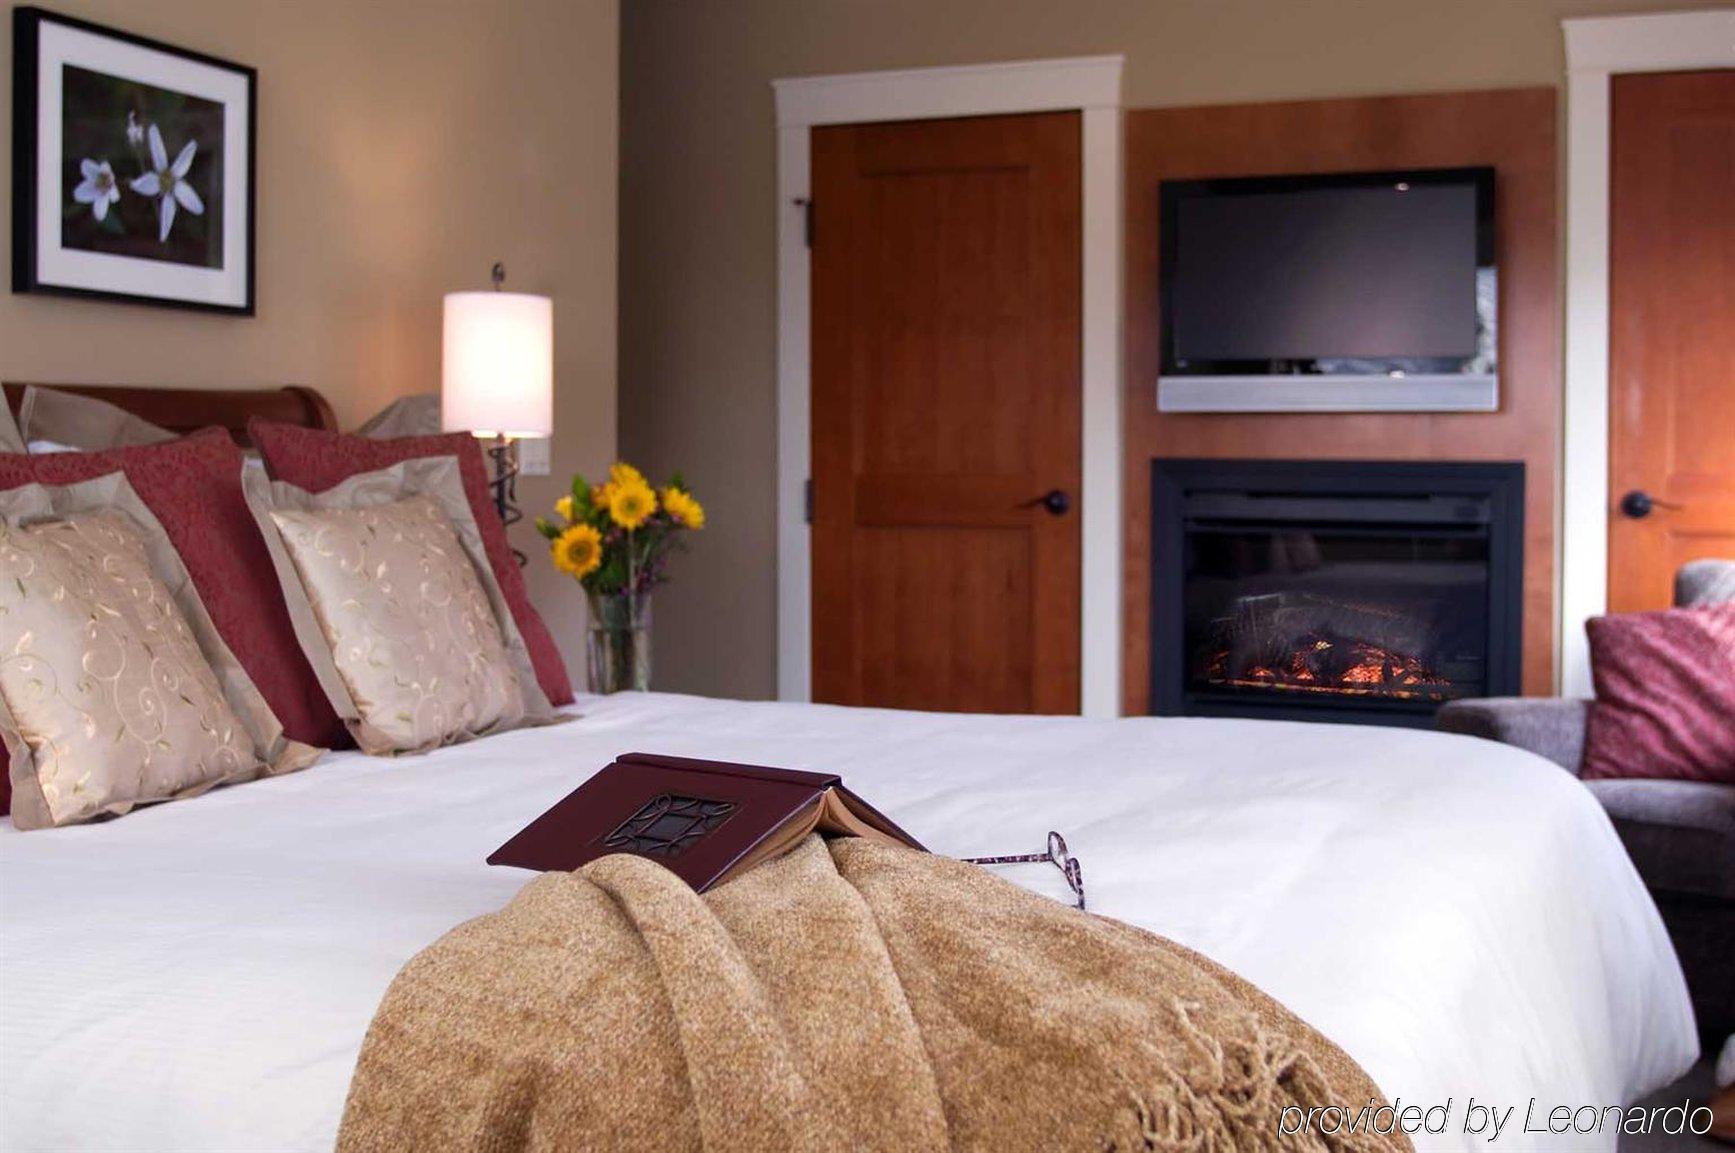 Solara Resort By Bellstar Hotels Canmore Room photo